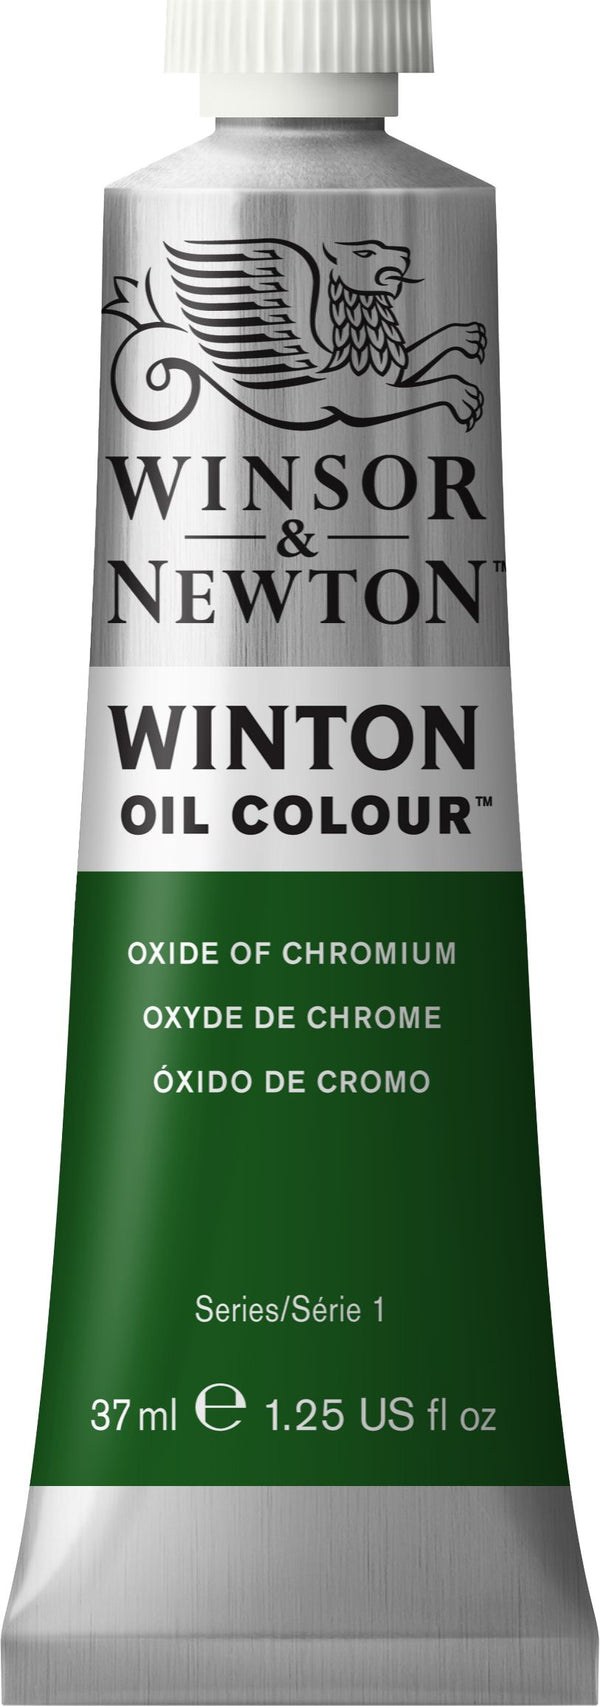 Winton Oil Colour Oxide of Chromium - 37ml tube